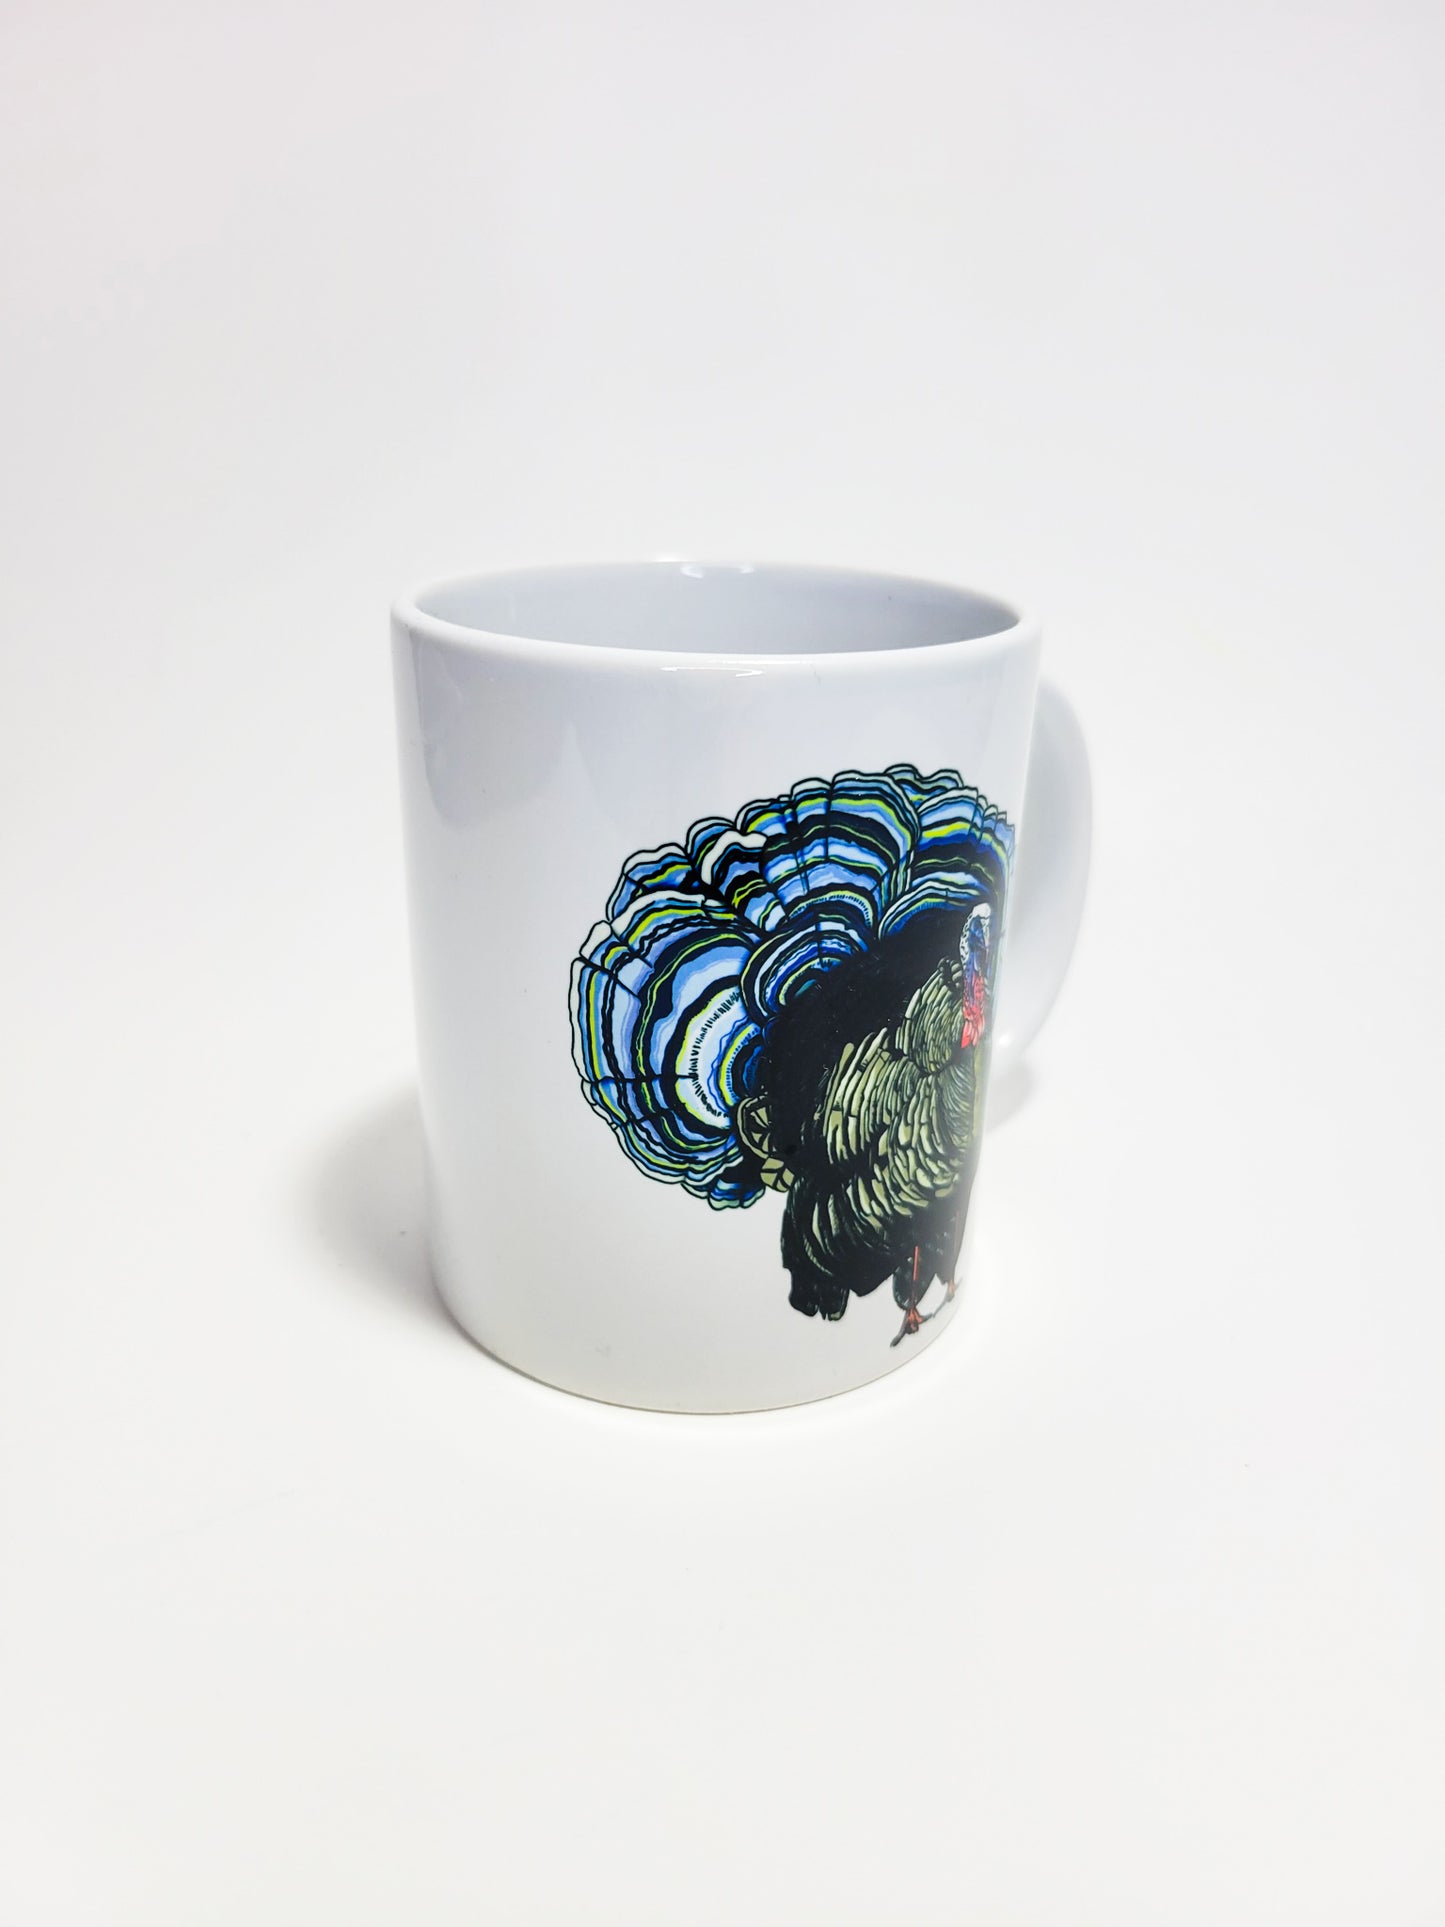 Turkey Tail | Funny Mushroom Mug | Mushroom Artwork on Ceramic Cup | 11oz/15oz Sizes